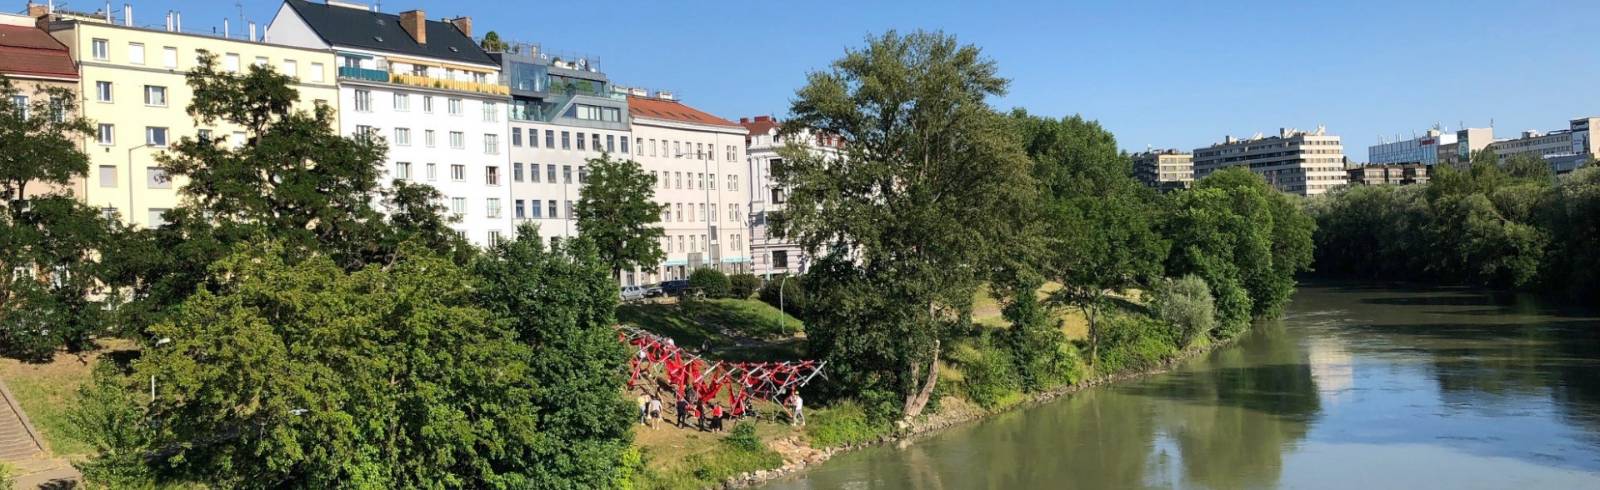 Bezirksflash: Wal am Donaukanal gestrandet